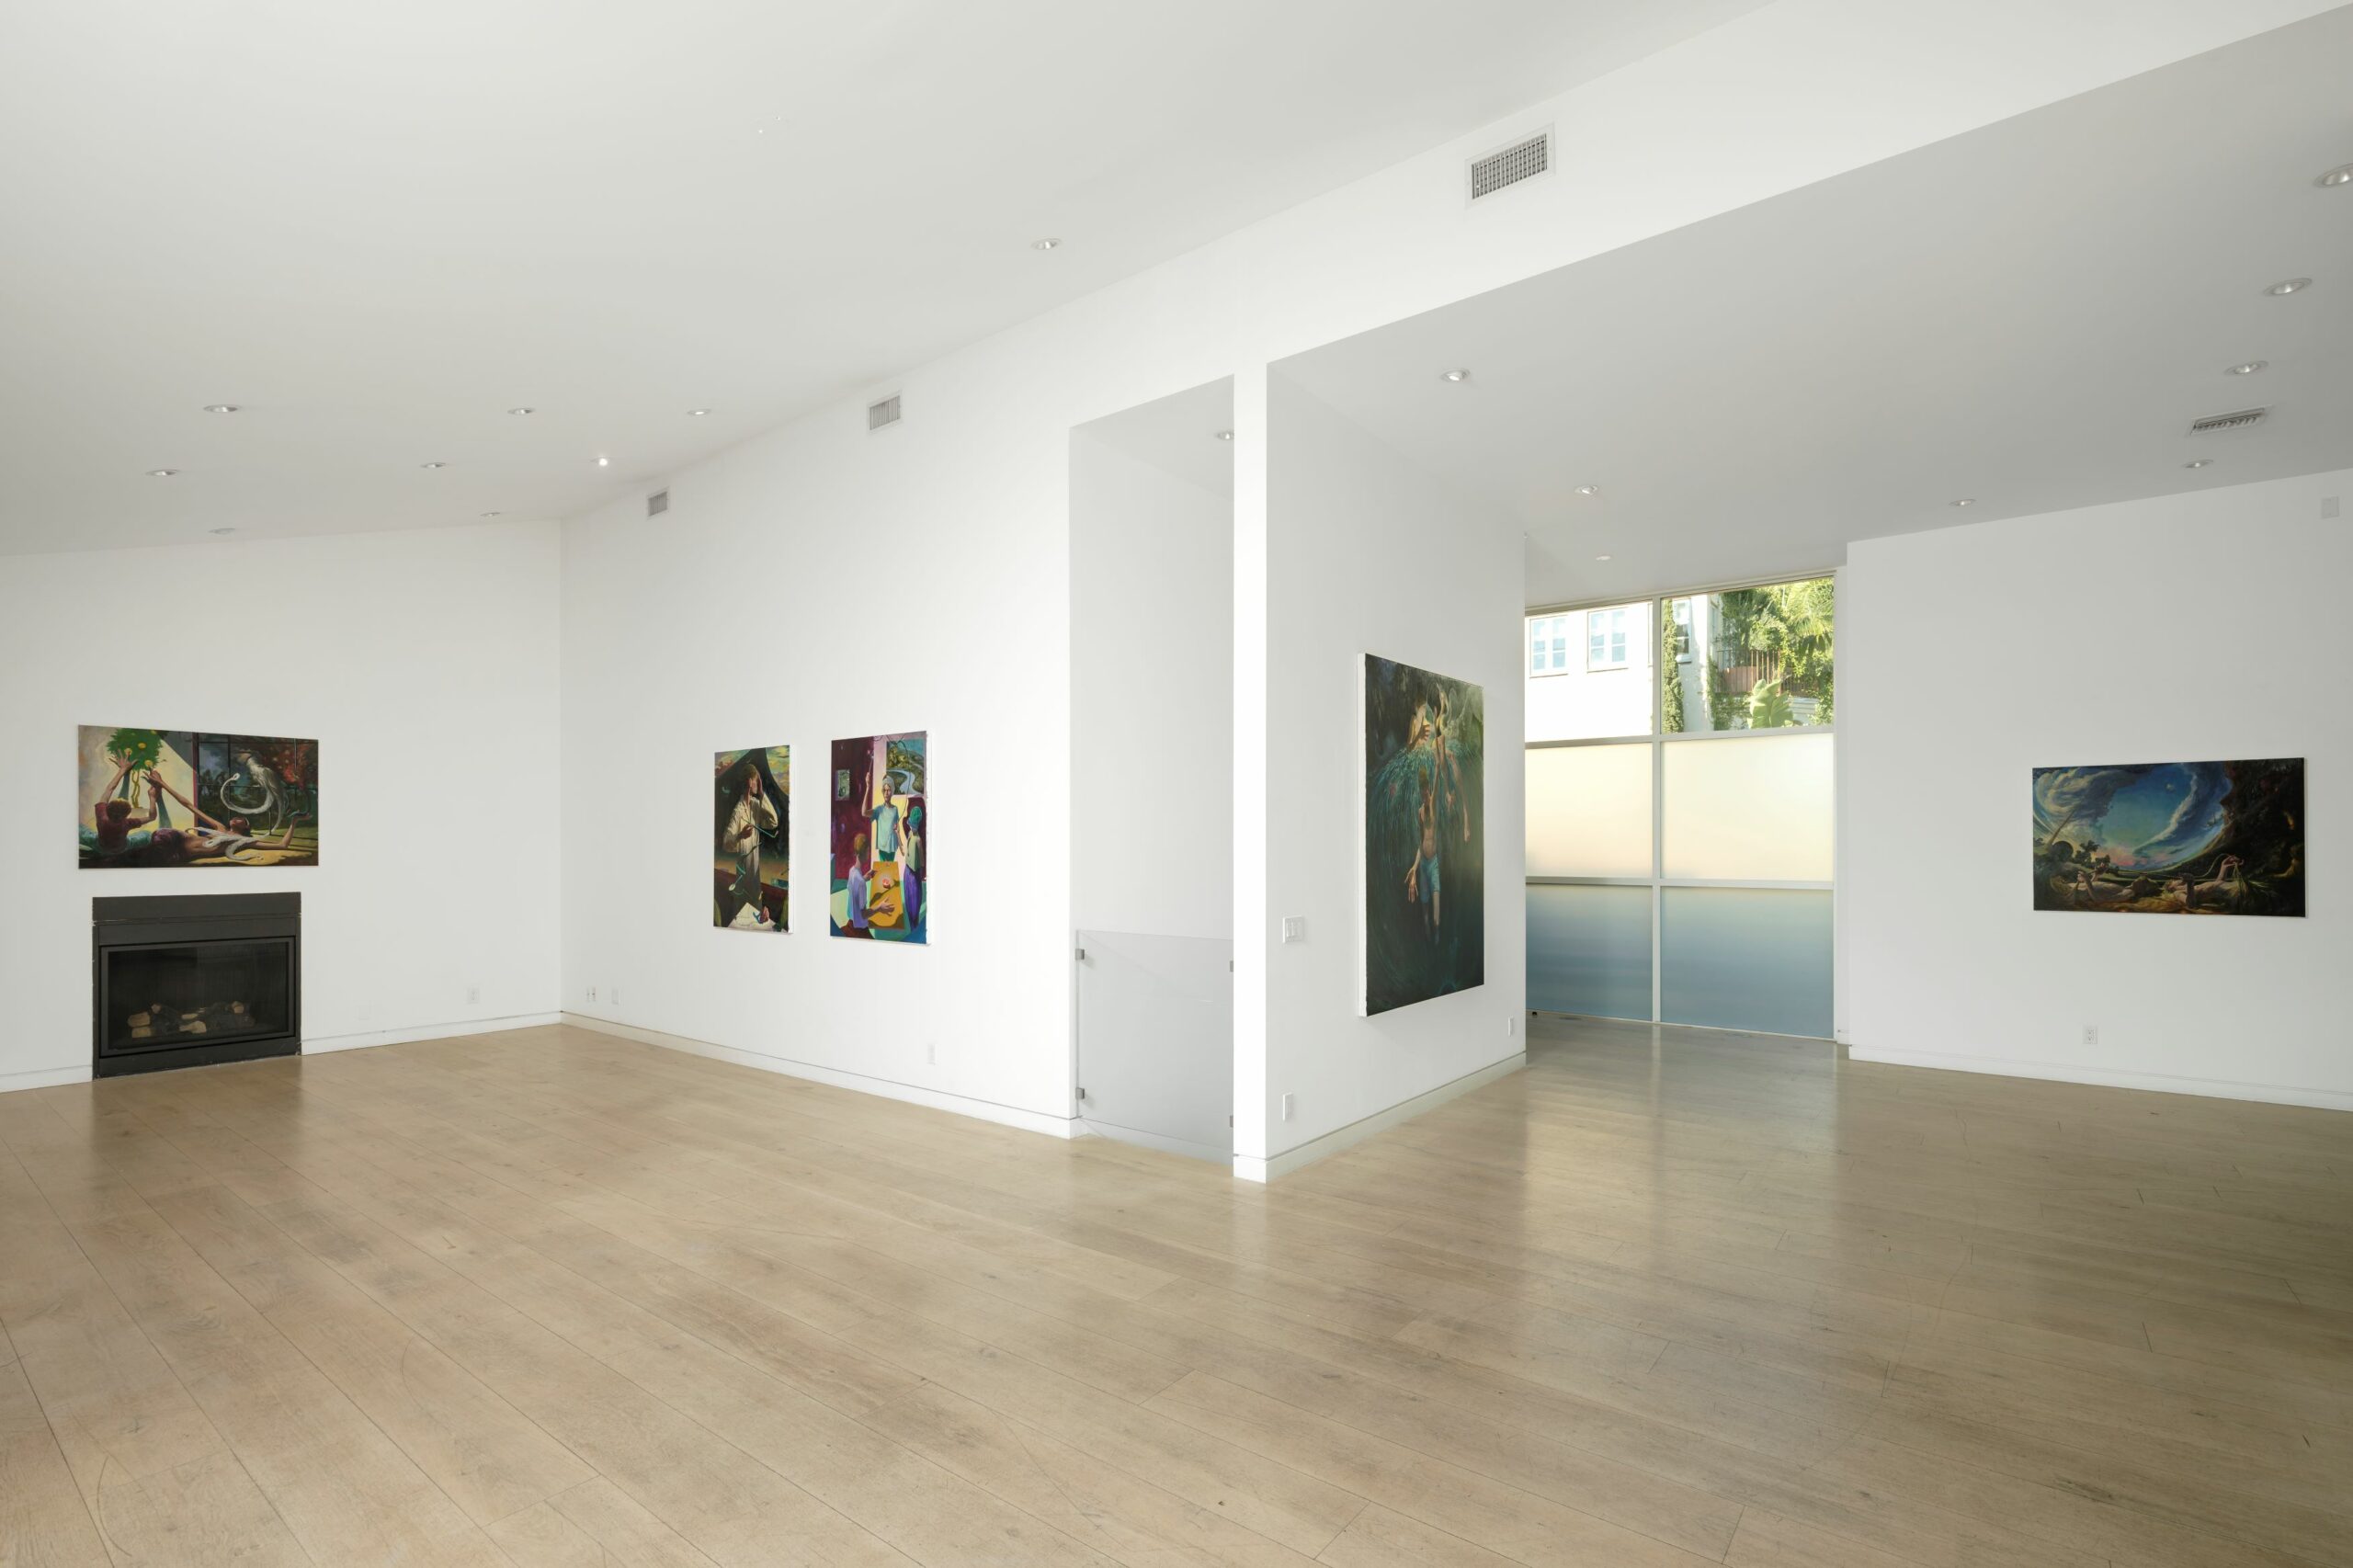 An image of Leo Frontini's Portae art exhibition at albertz Benda gallery.